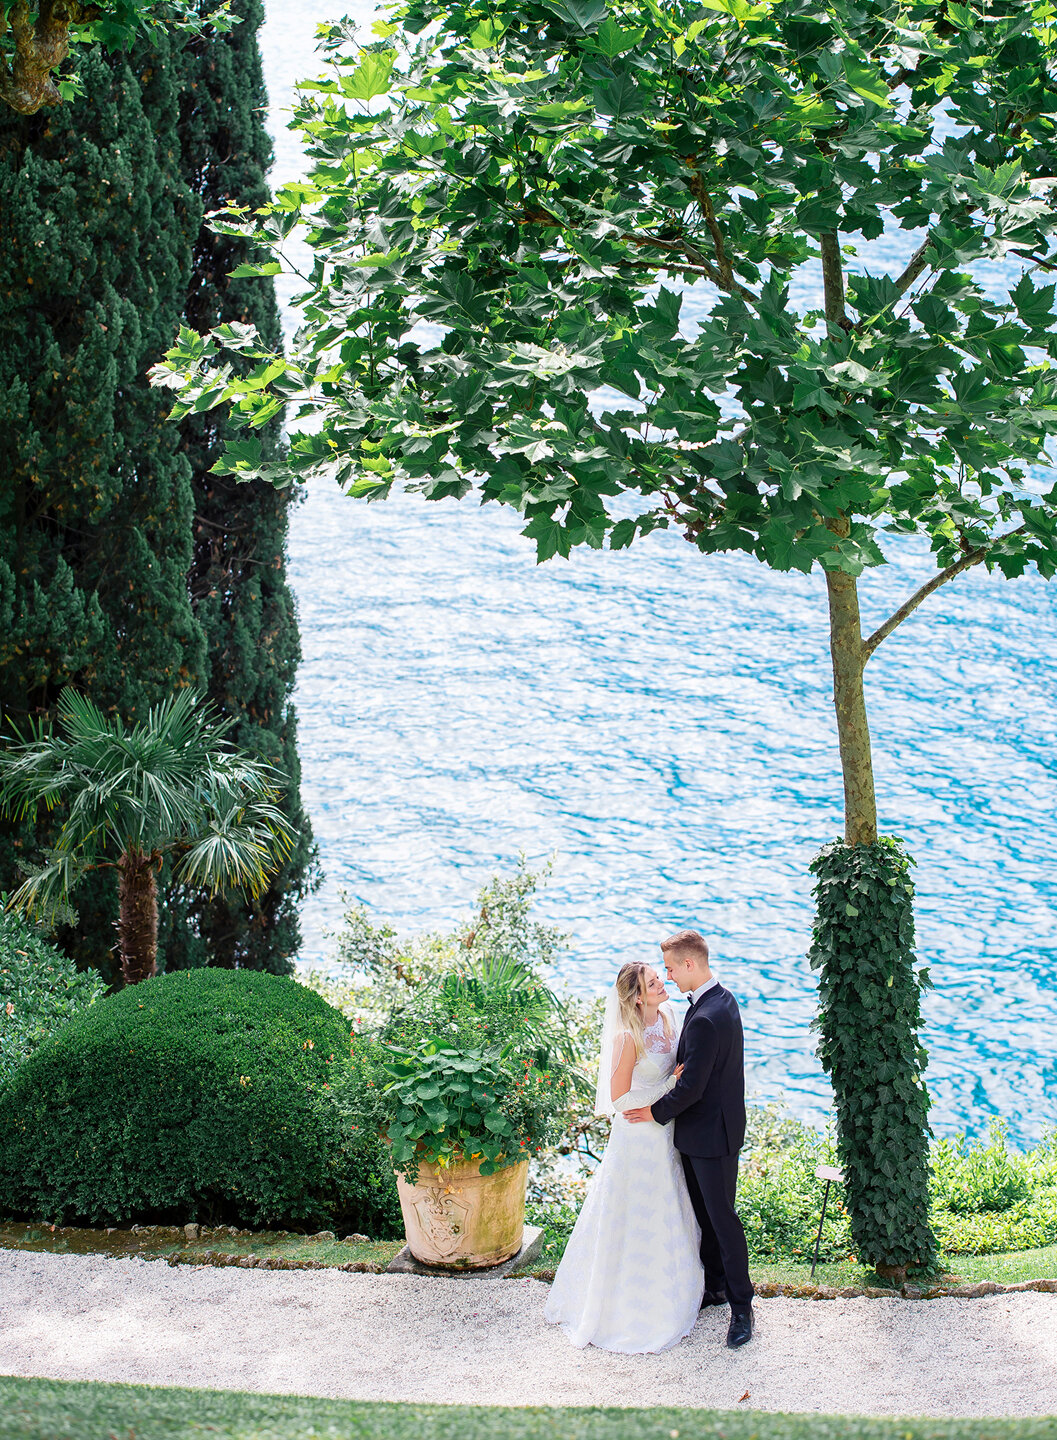 Villa del Balbianello wedding: the couple standing by the lake